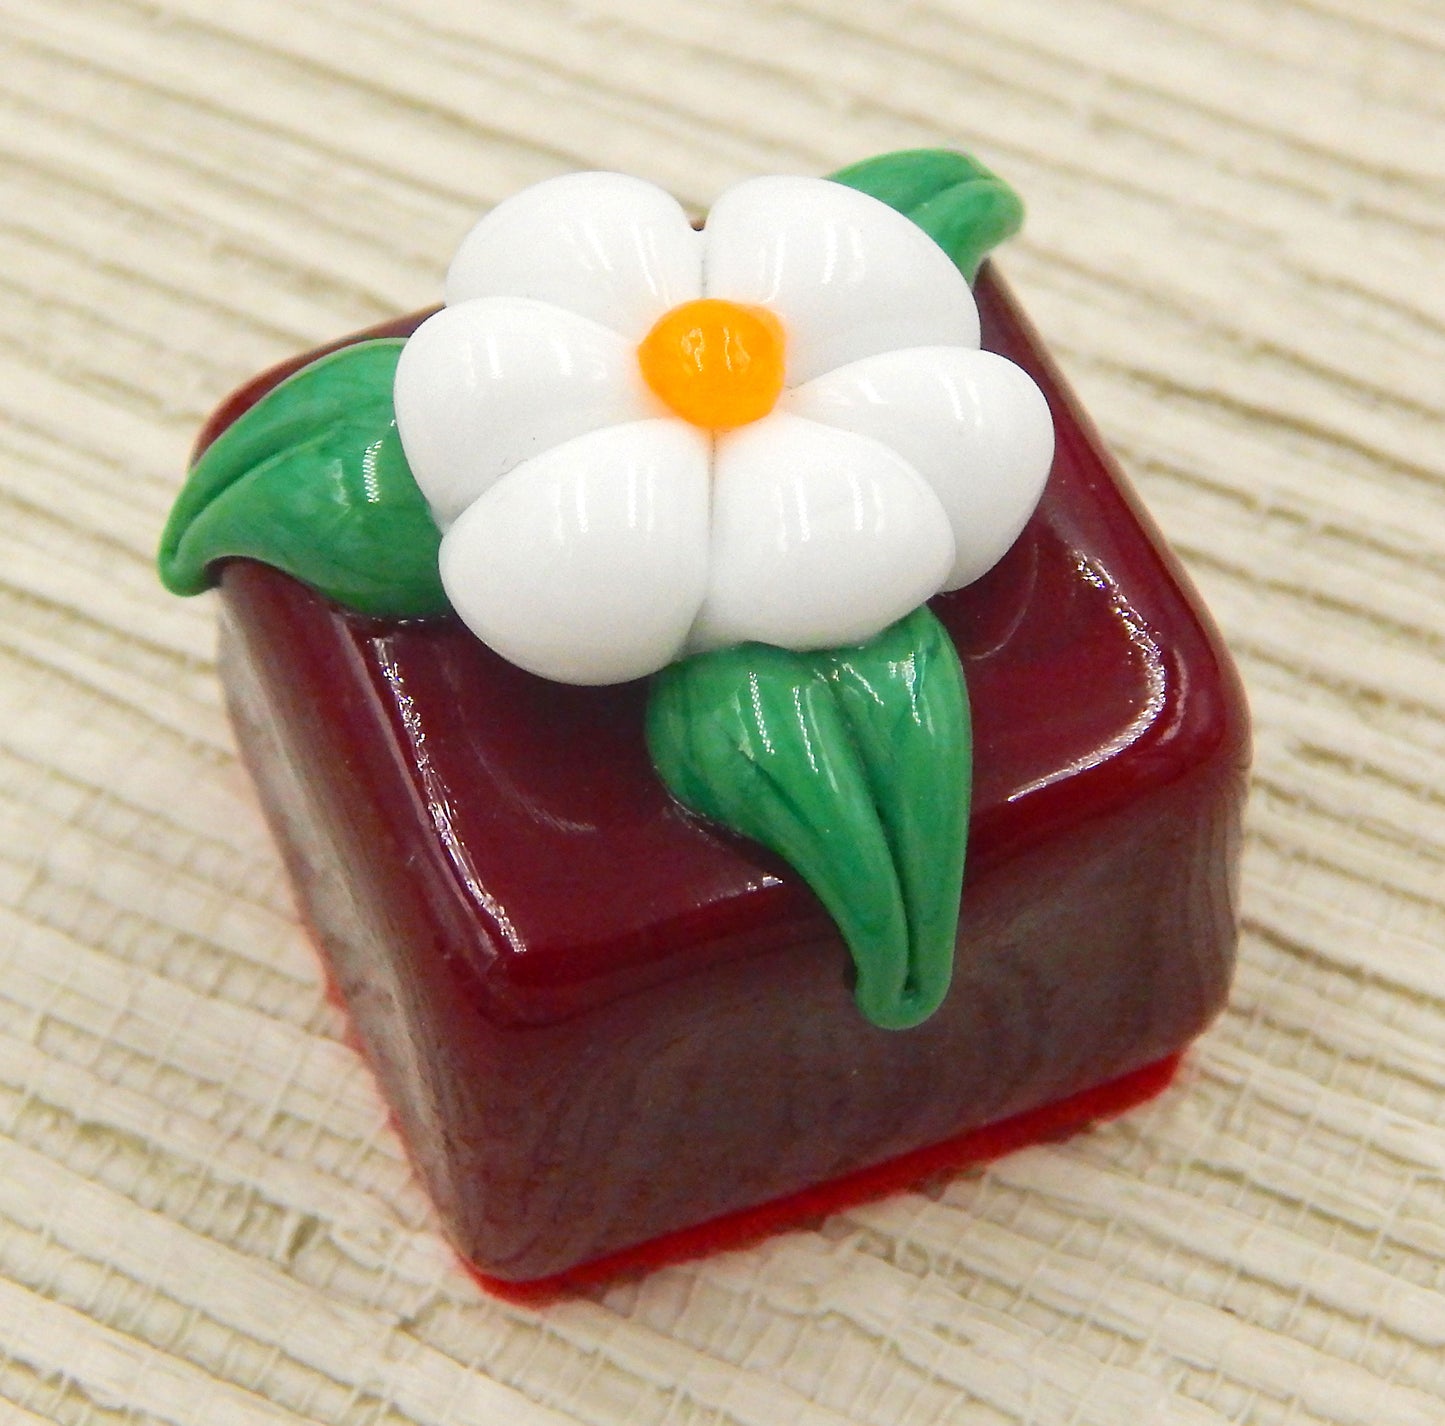 Deep Cherry Chocolate Cube with White Chocolate Flower (15-024HW)